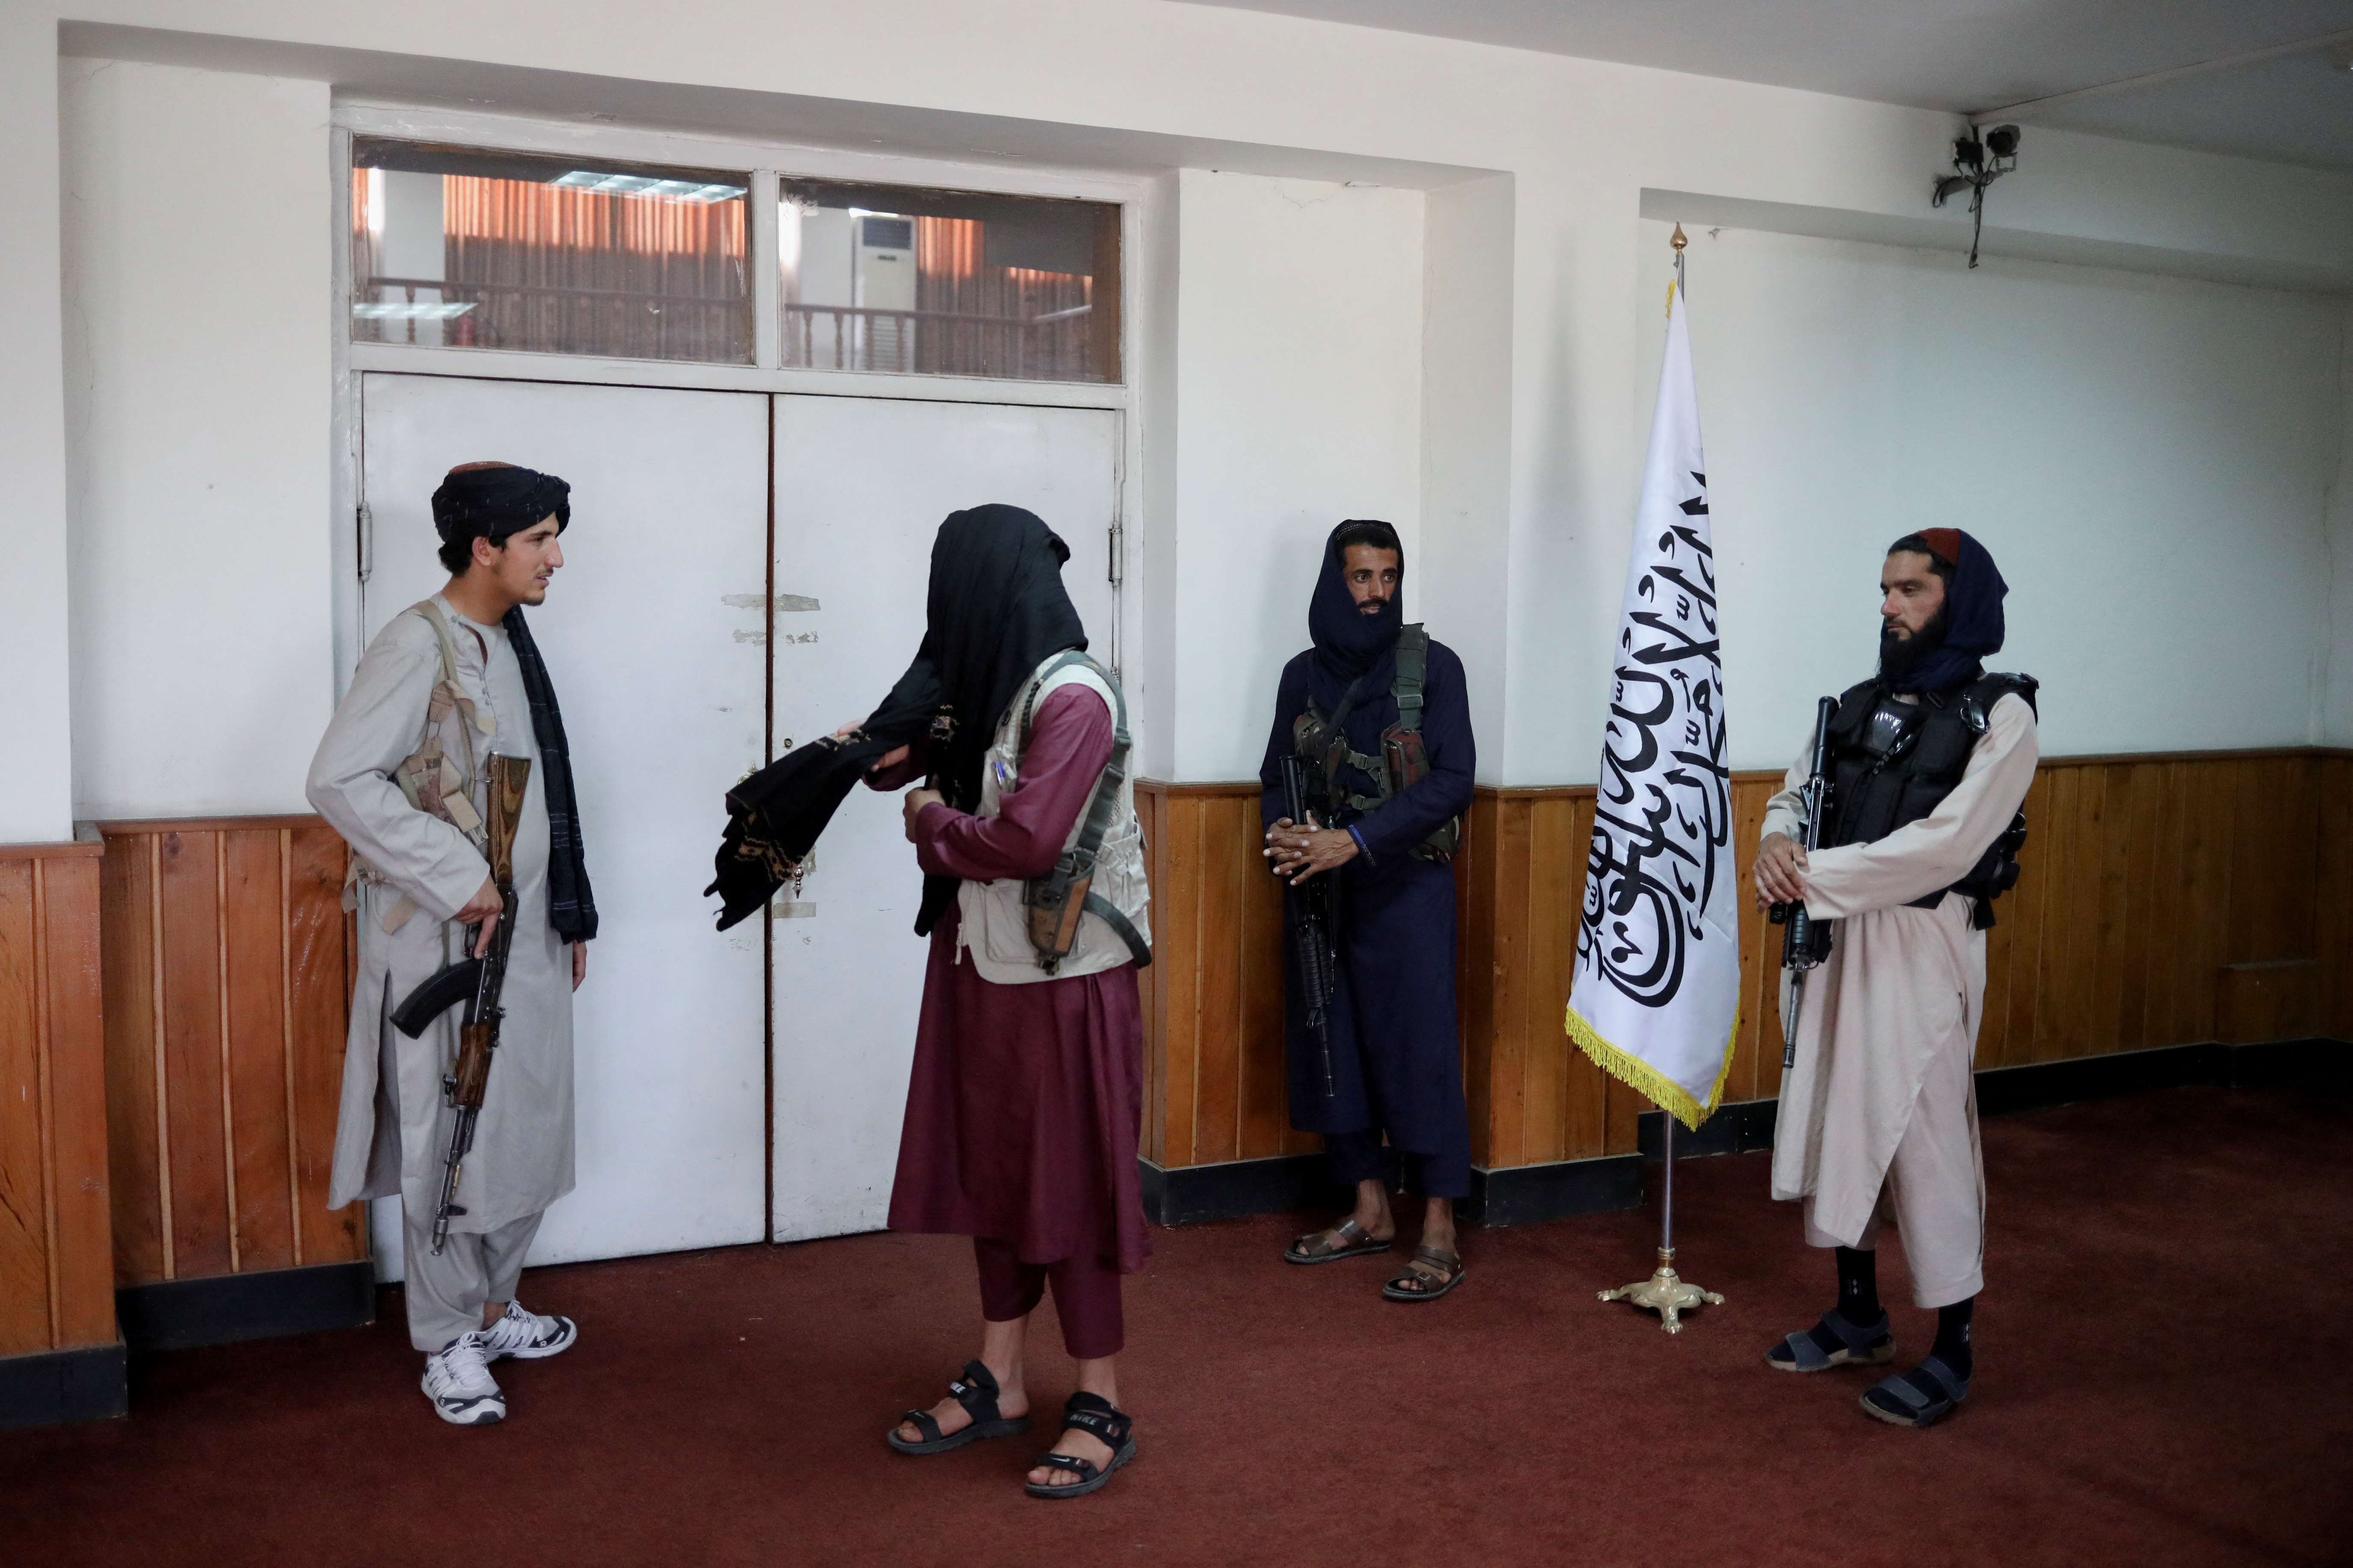 Taliban fighters stand guard at a news conference about a new command of hijab by Taliban leader Mullah Haibatullah Akhundzada, in Kabul